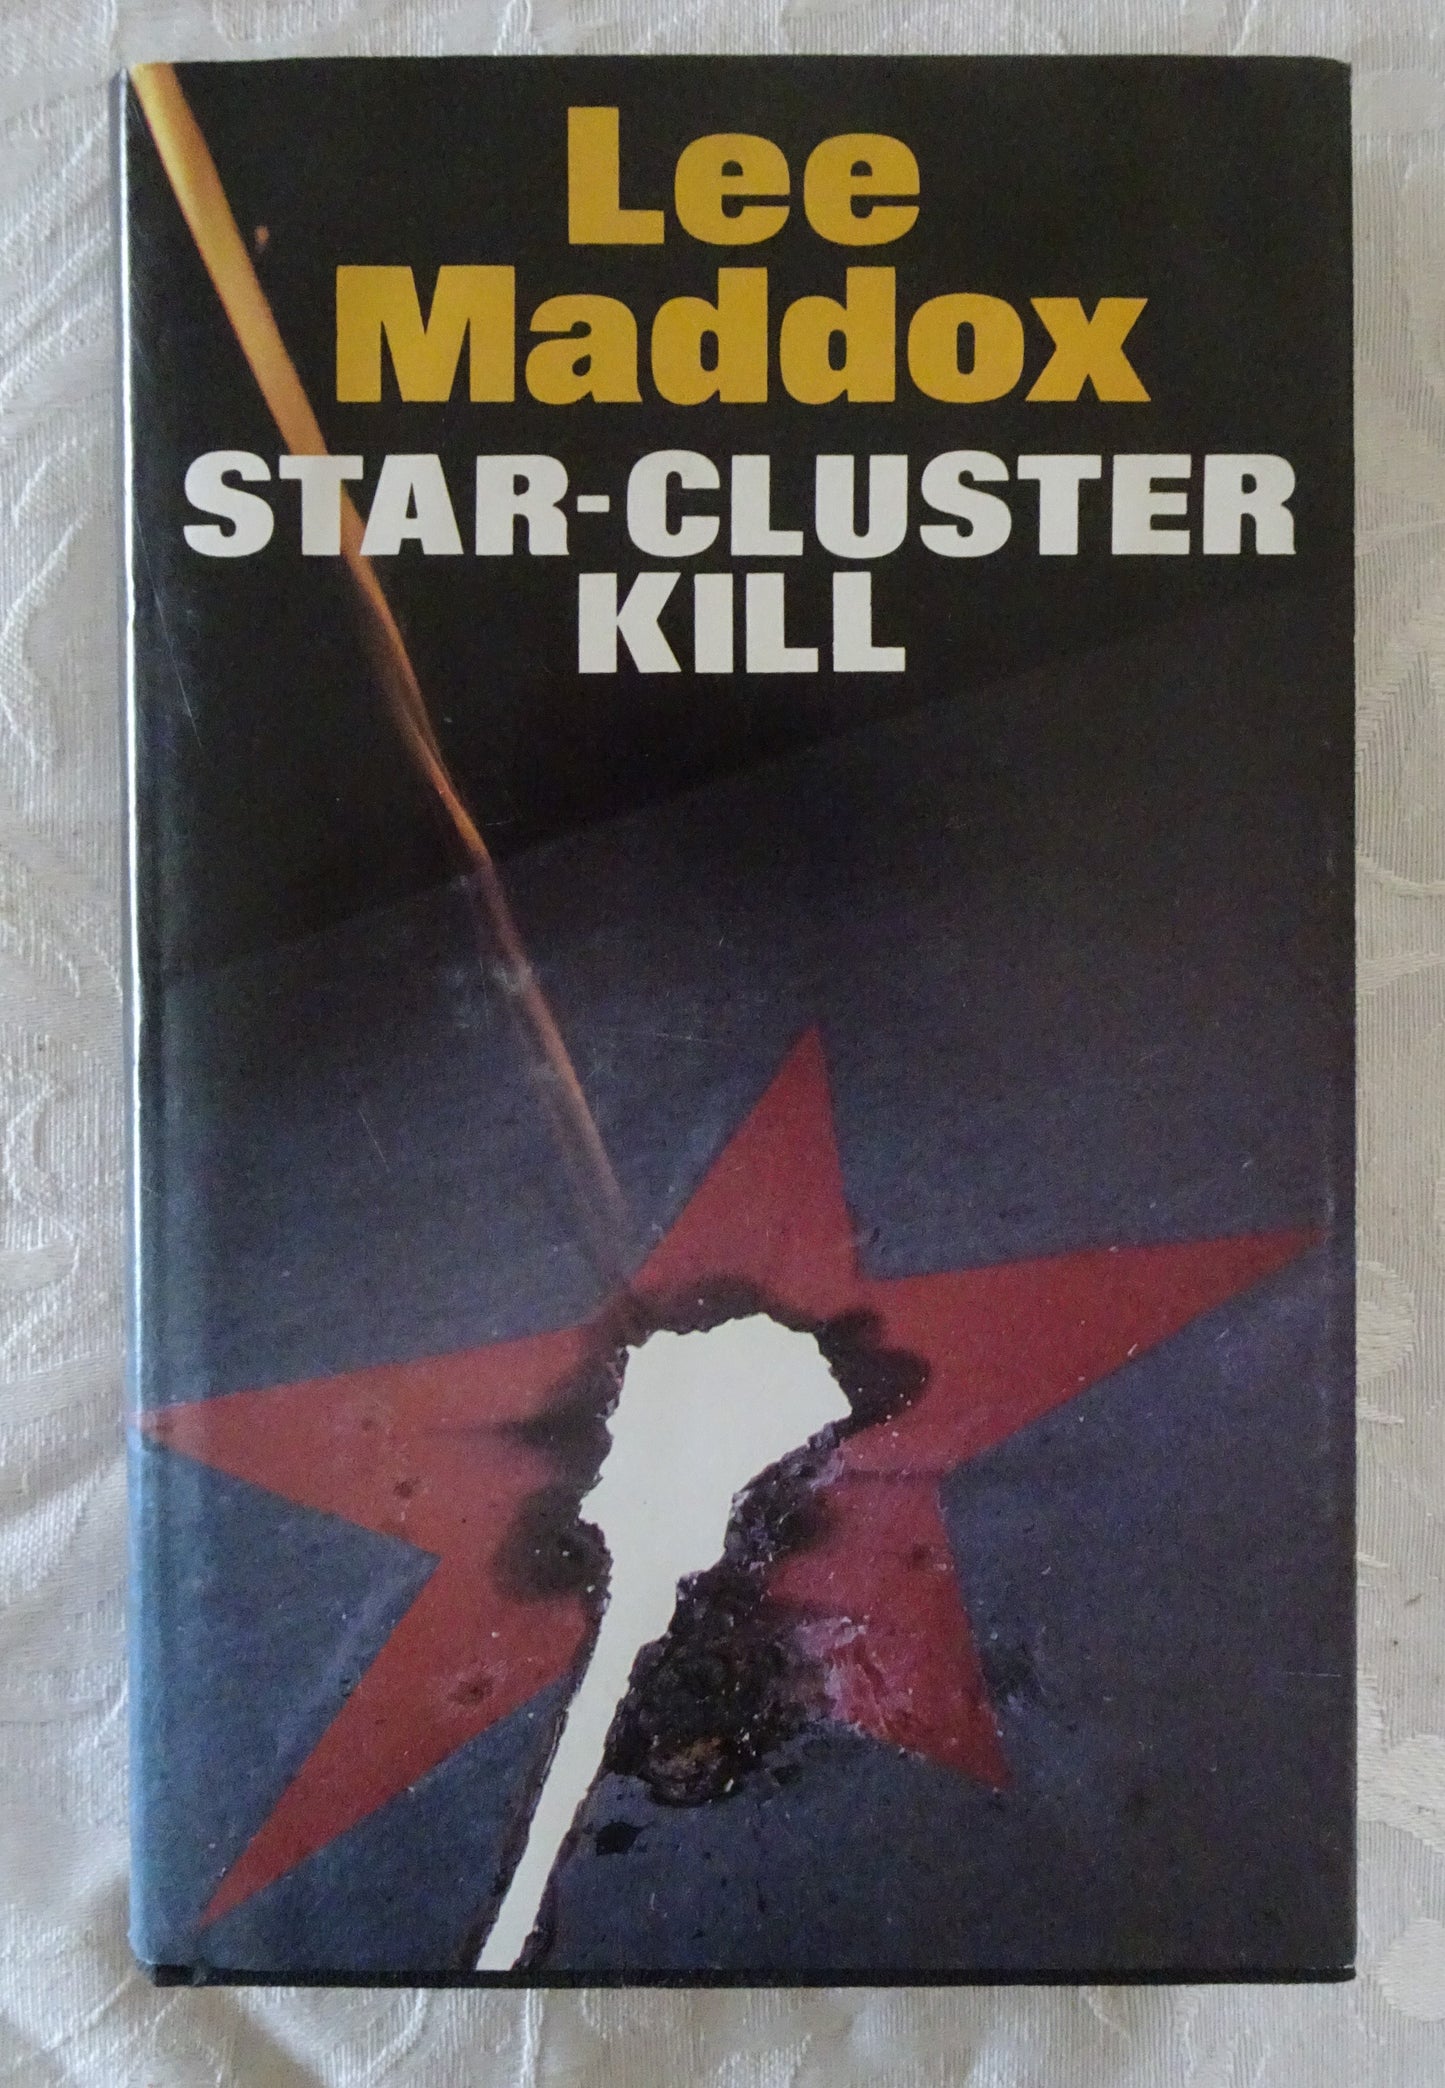 Star-Cluster Kill by Lee Maddox